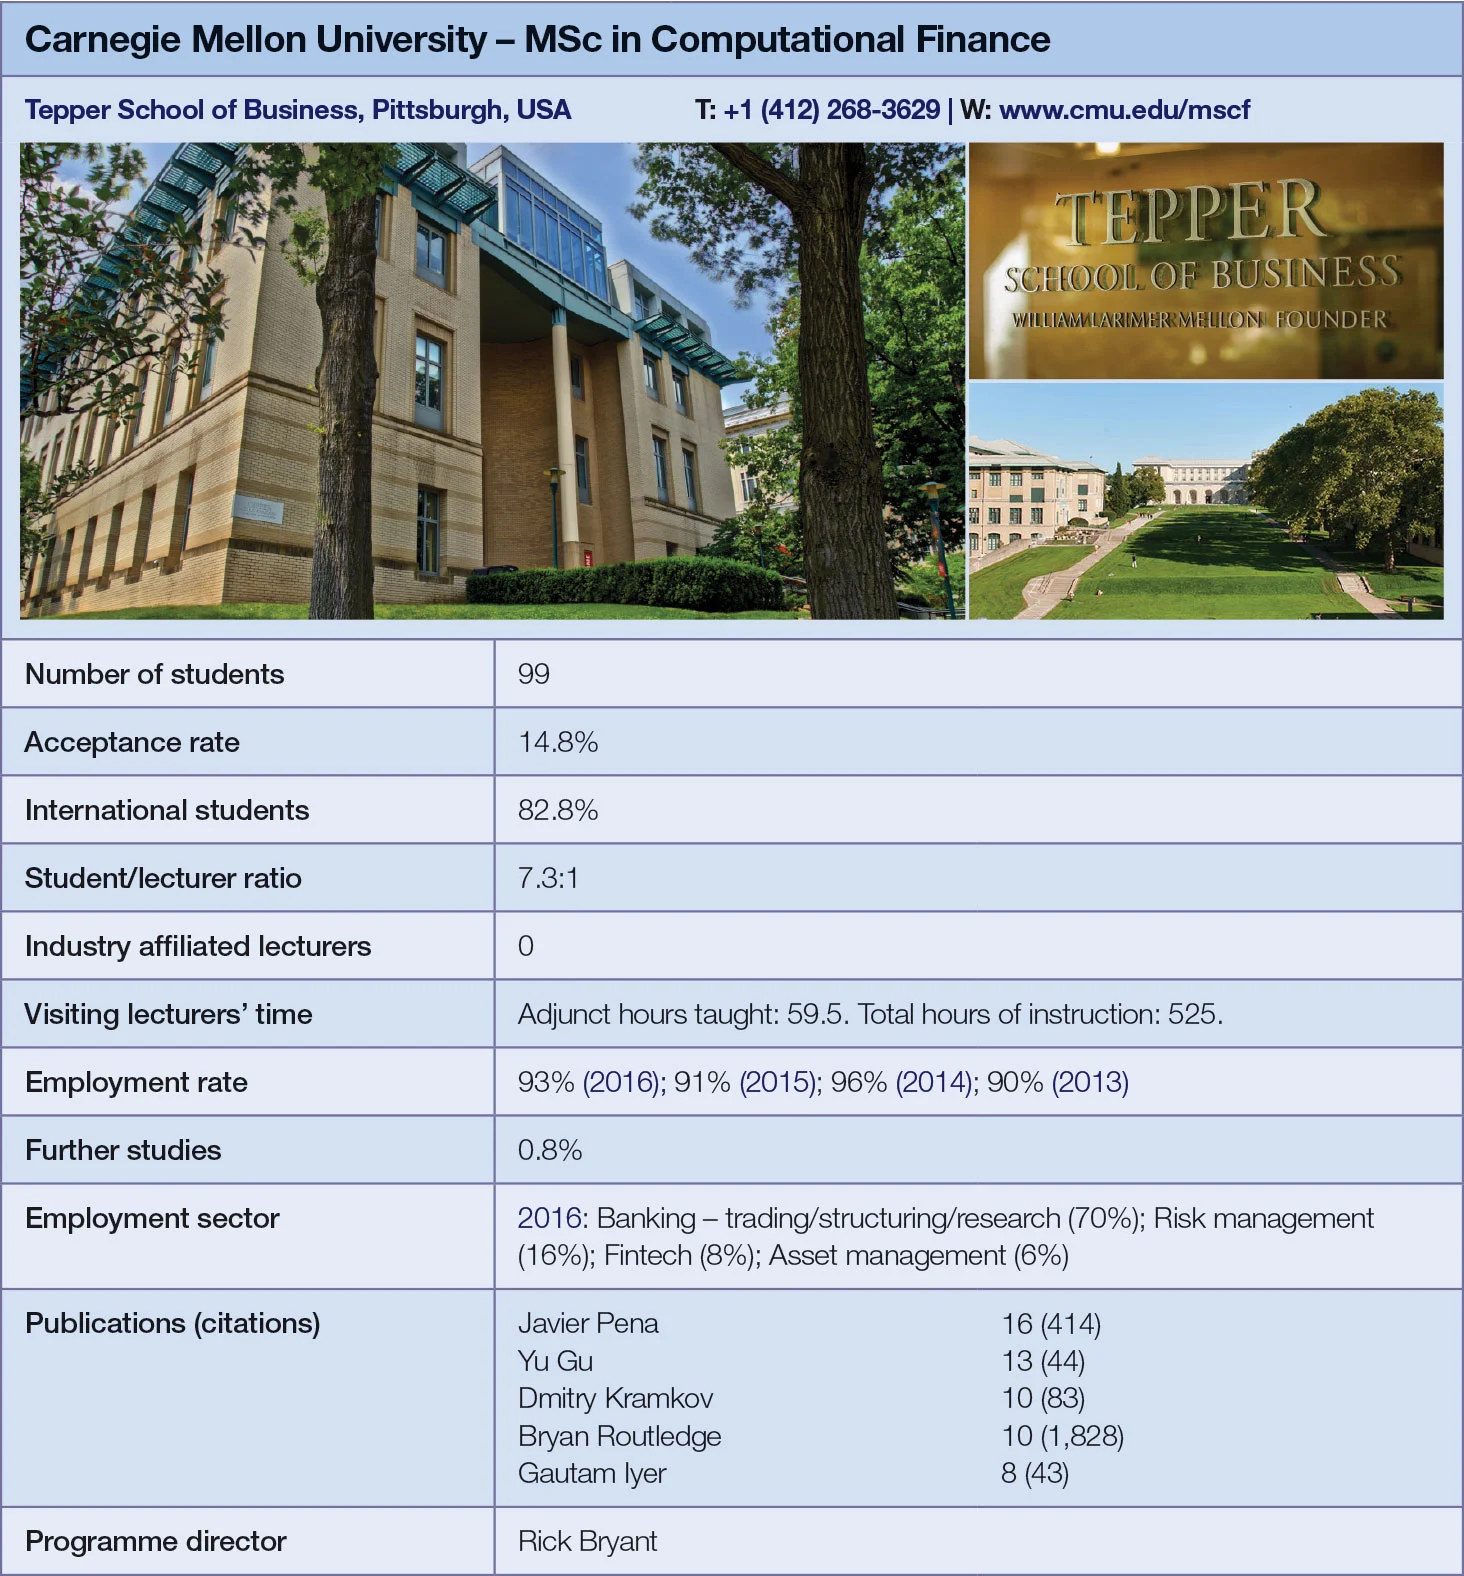 Carnegie Mellon University metrics